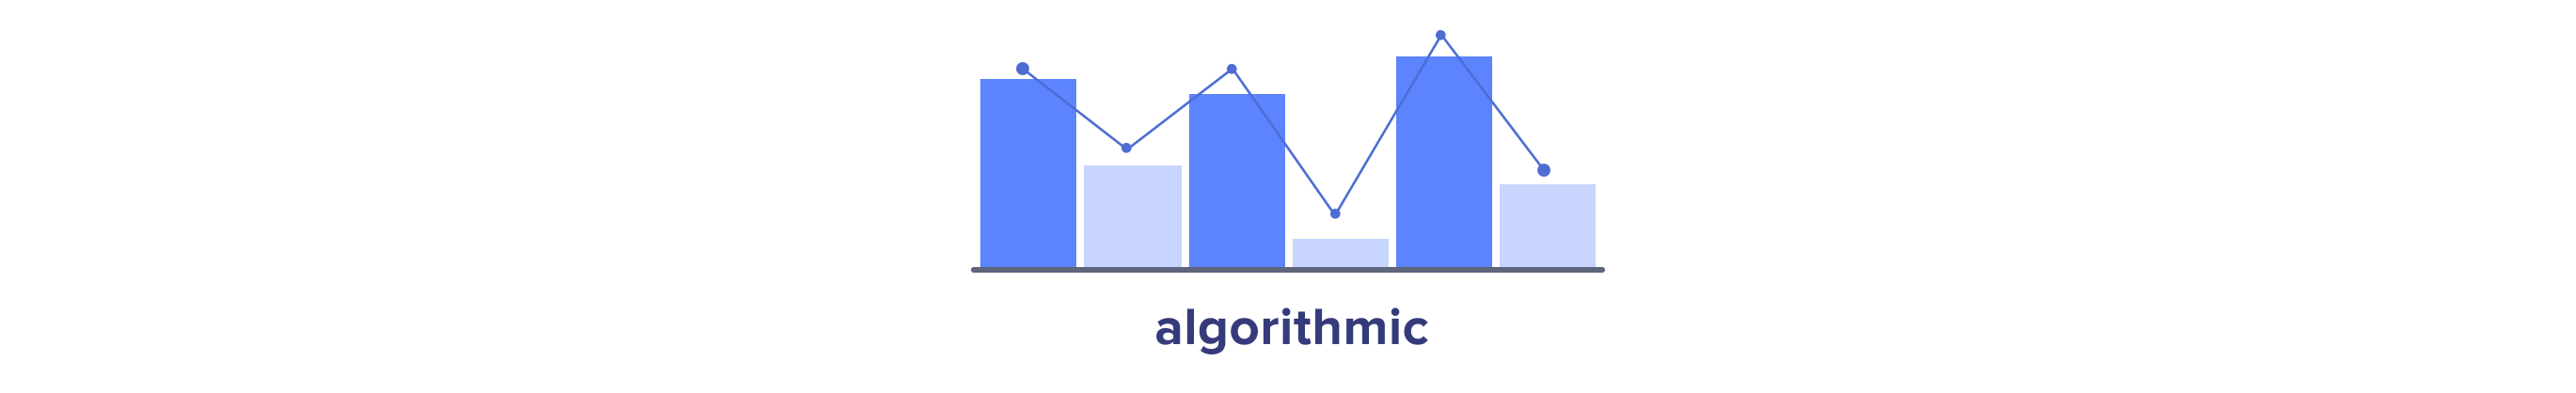 Algorithmic attribution model